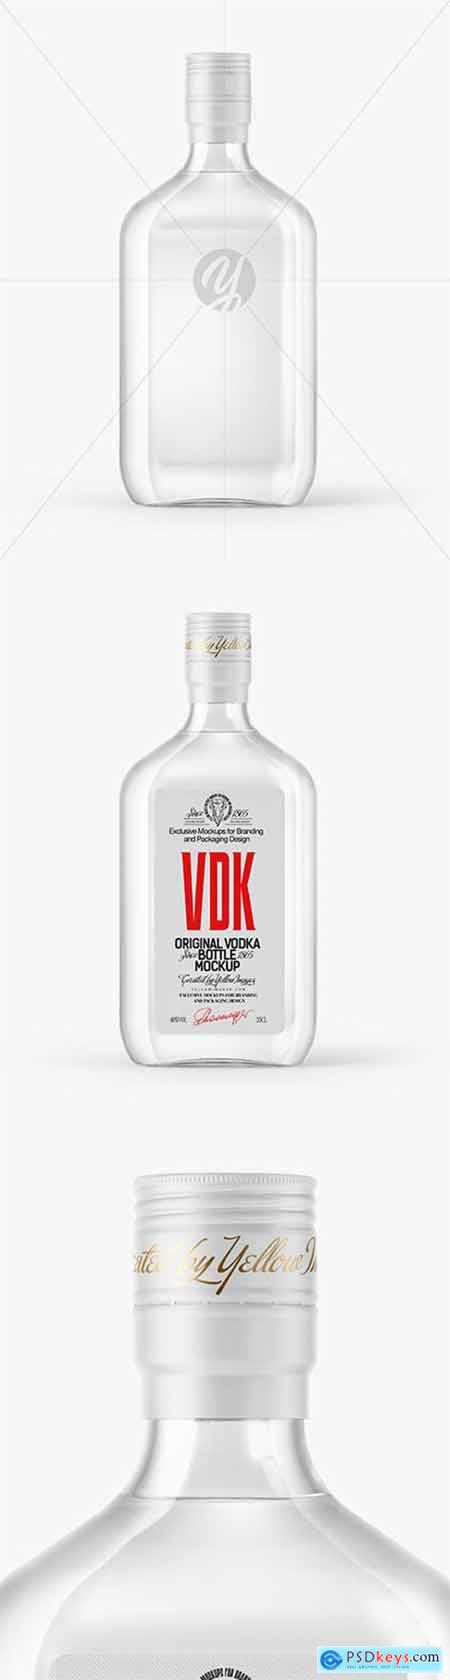 Download Glass Vodka Bottle Mockup 64809 Free Download Photoshop Vector Stock Image Via Torrent Zippyshare From Psdkeys Com